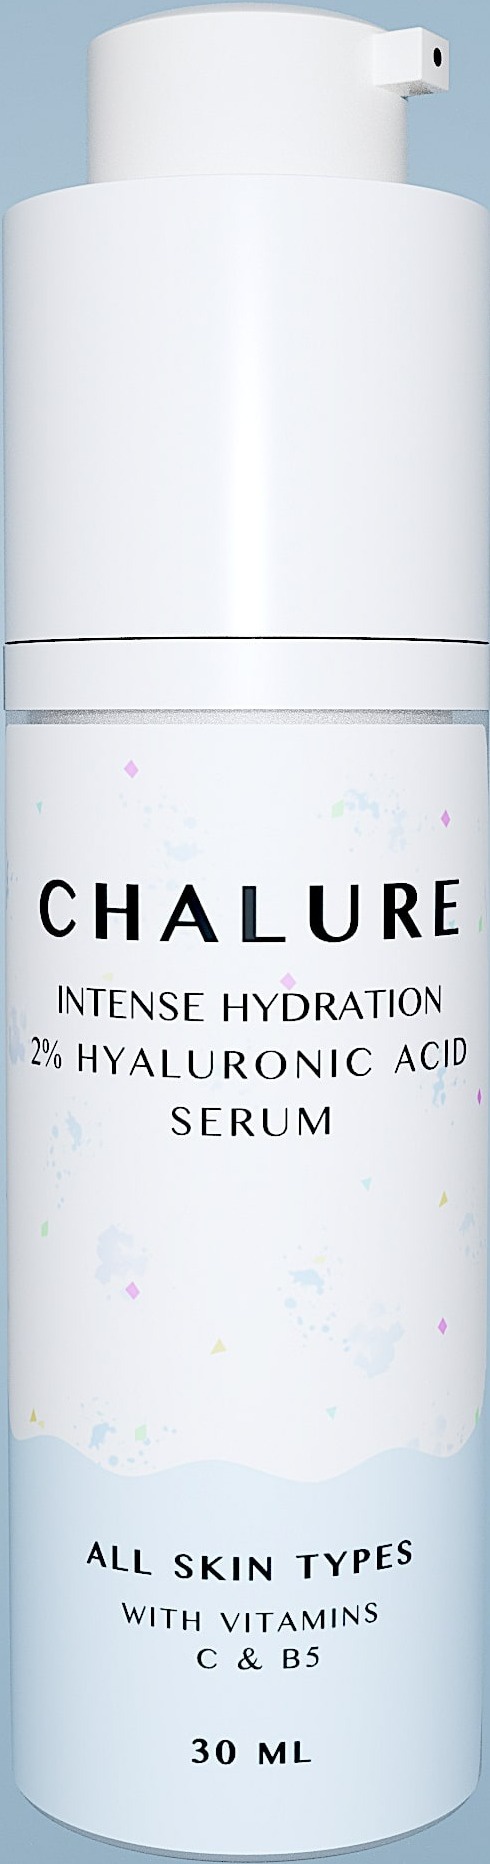 Chalure Intense Hydration 2% Hialuronic Acid Serum With Vitamin C & B5